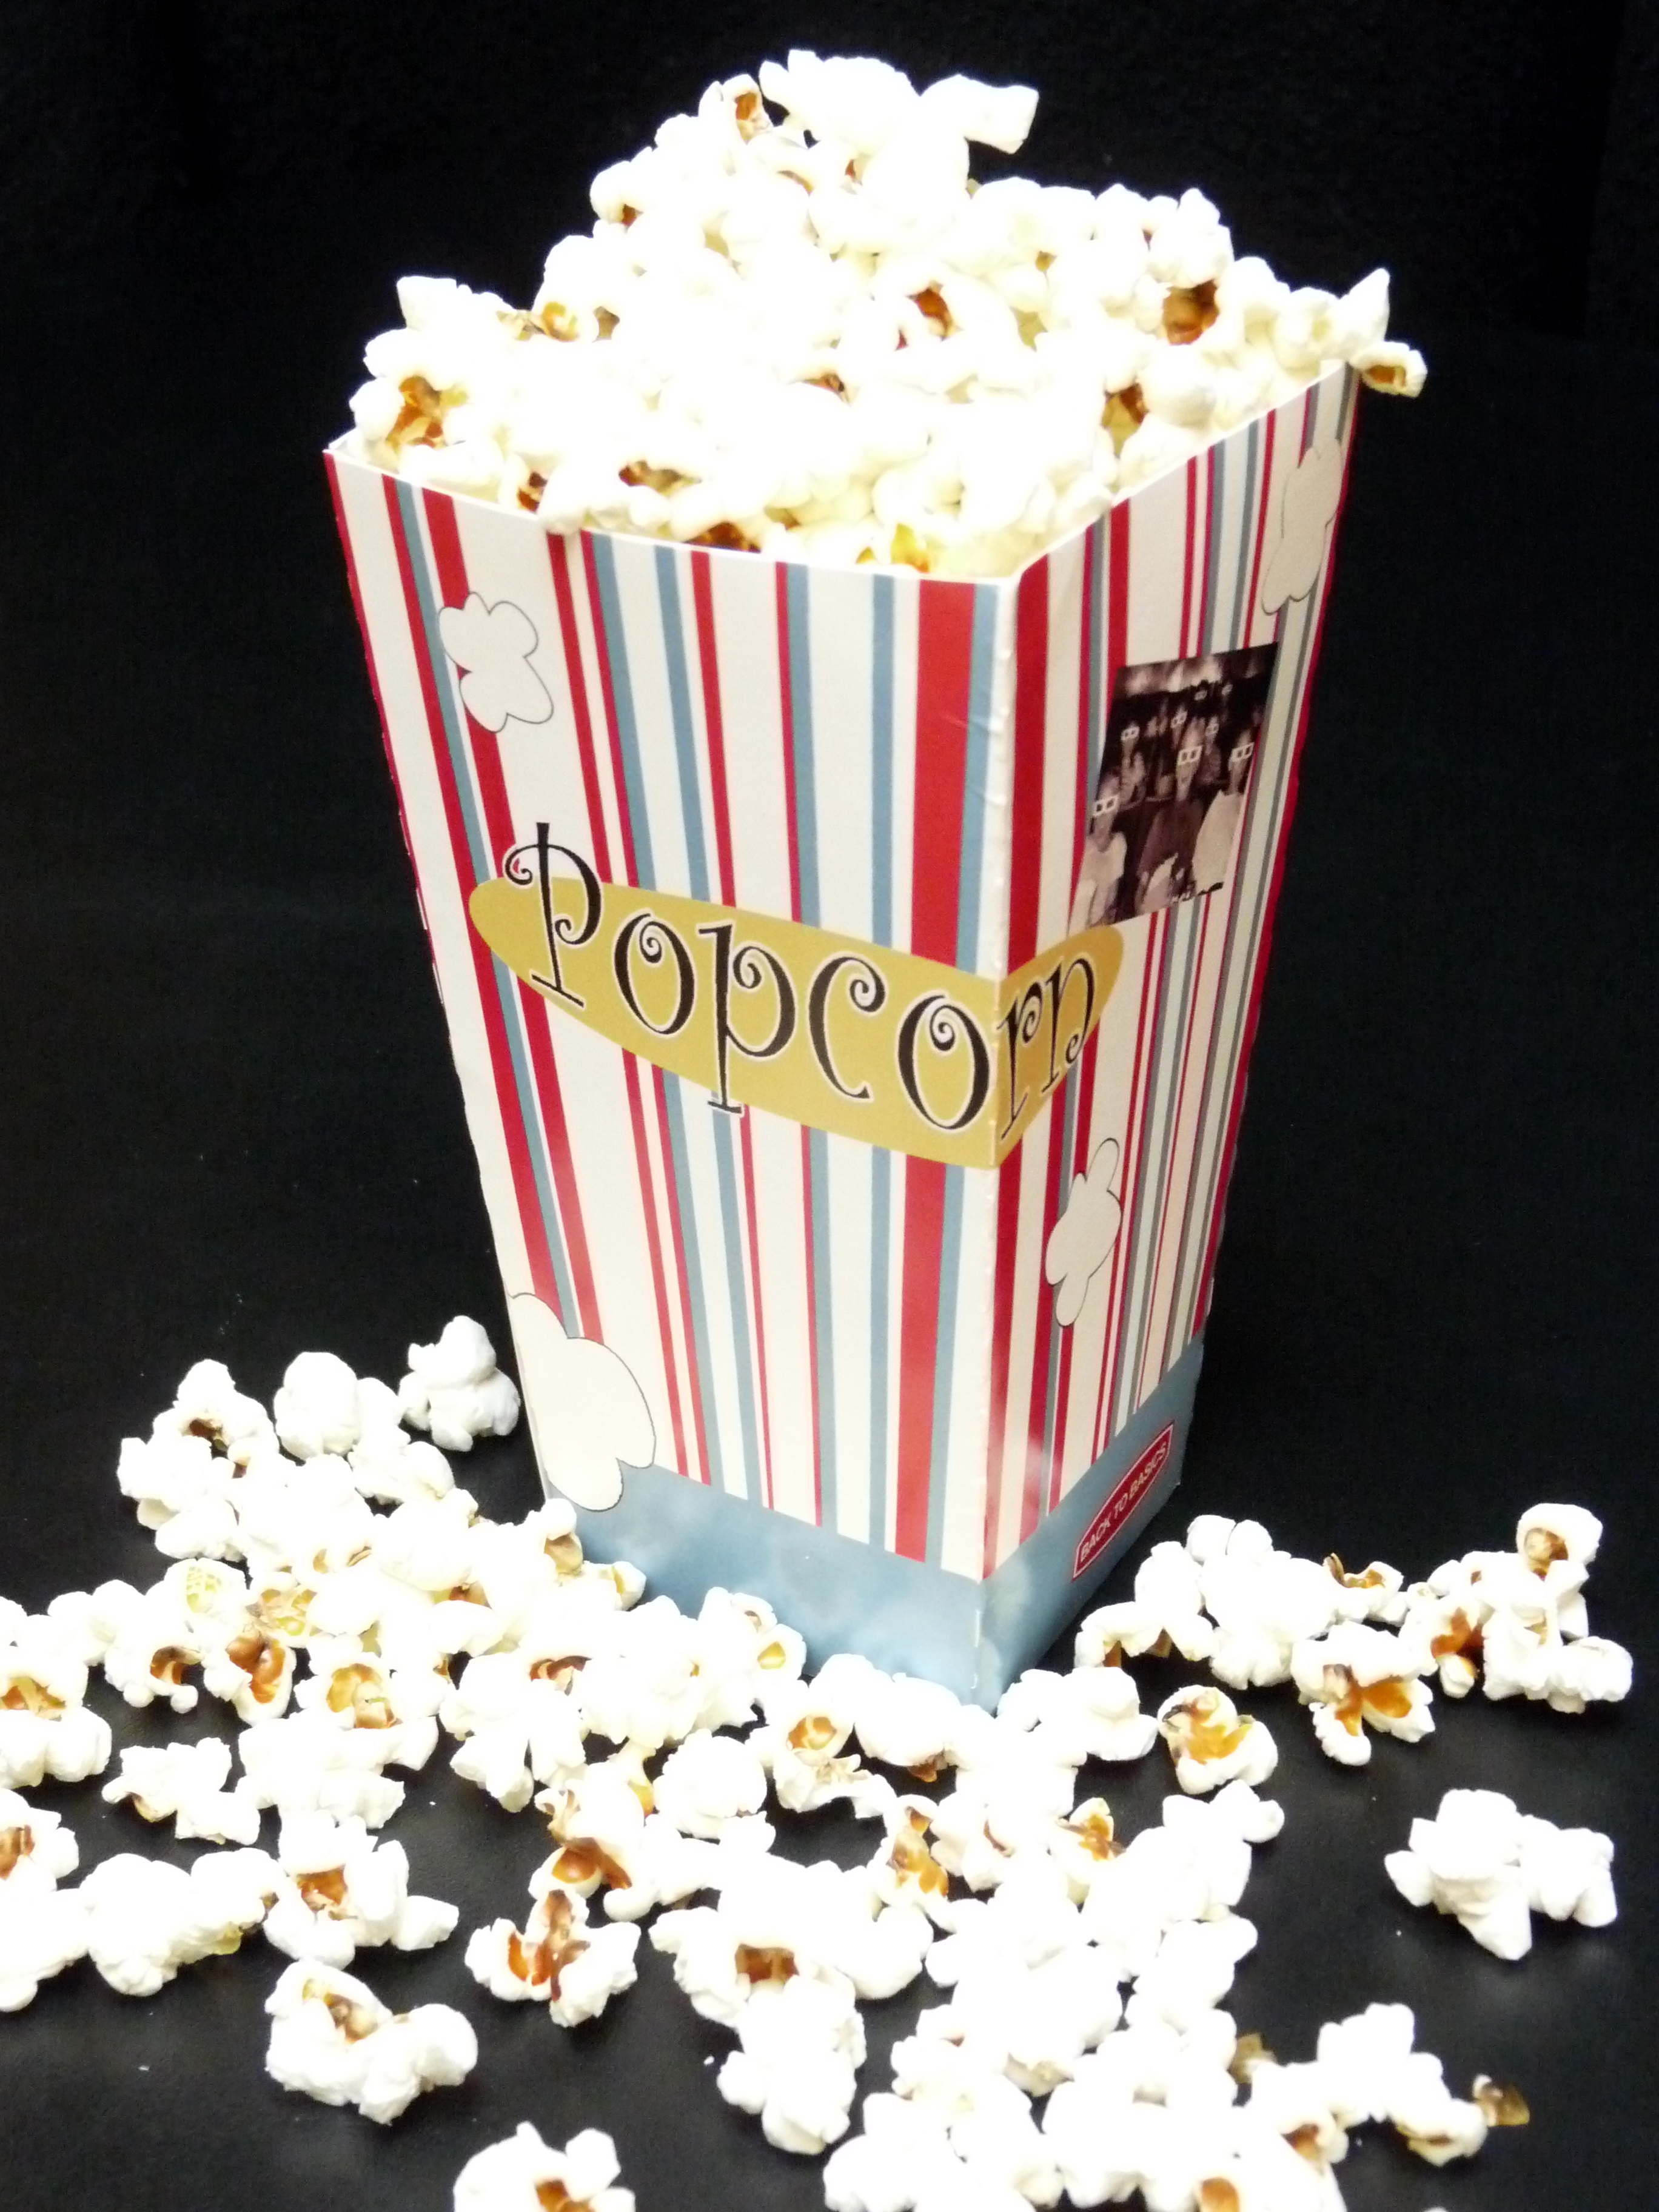 Is Your Popcorn Coated in Lighter Fluid?